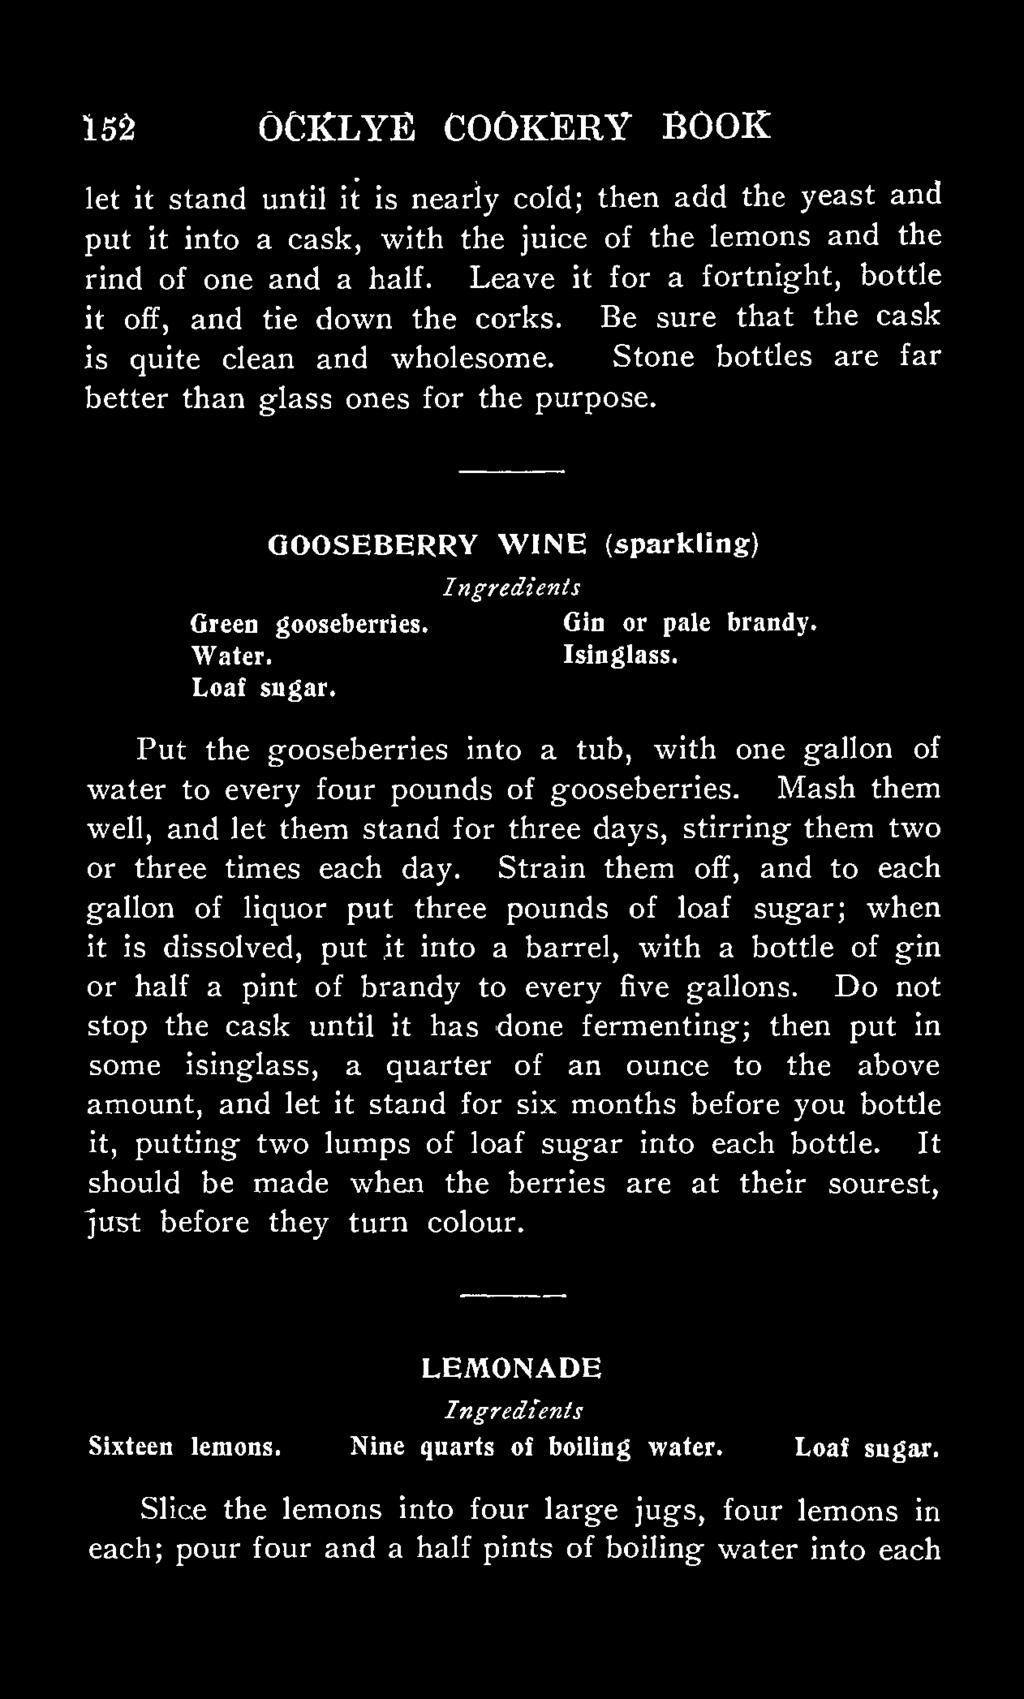 GOOSEBERRY WINE (sparkling) Green gooseberries. Gin or pale brandy. Water. Isinglass. Loaf sugar.